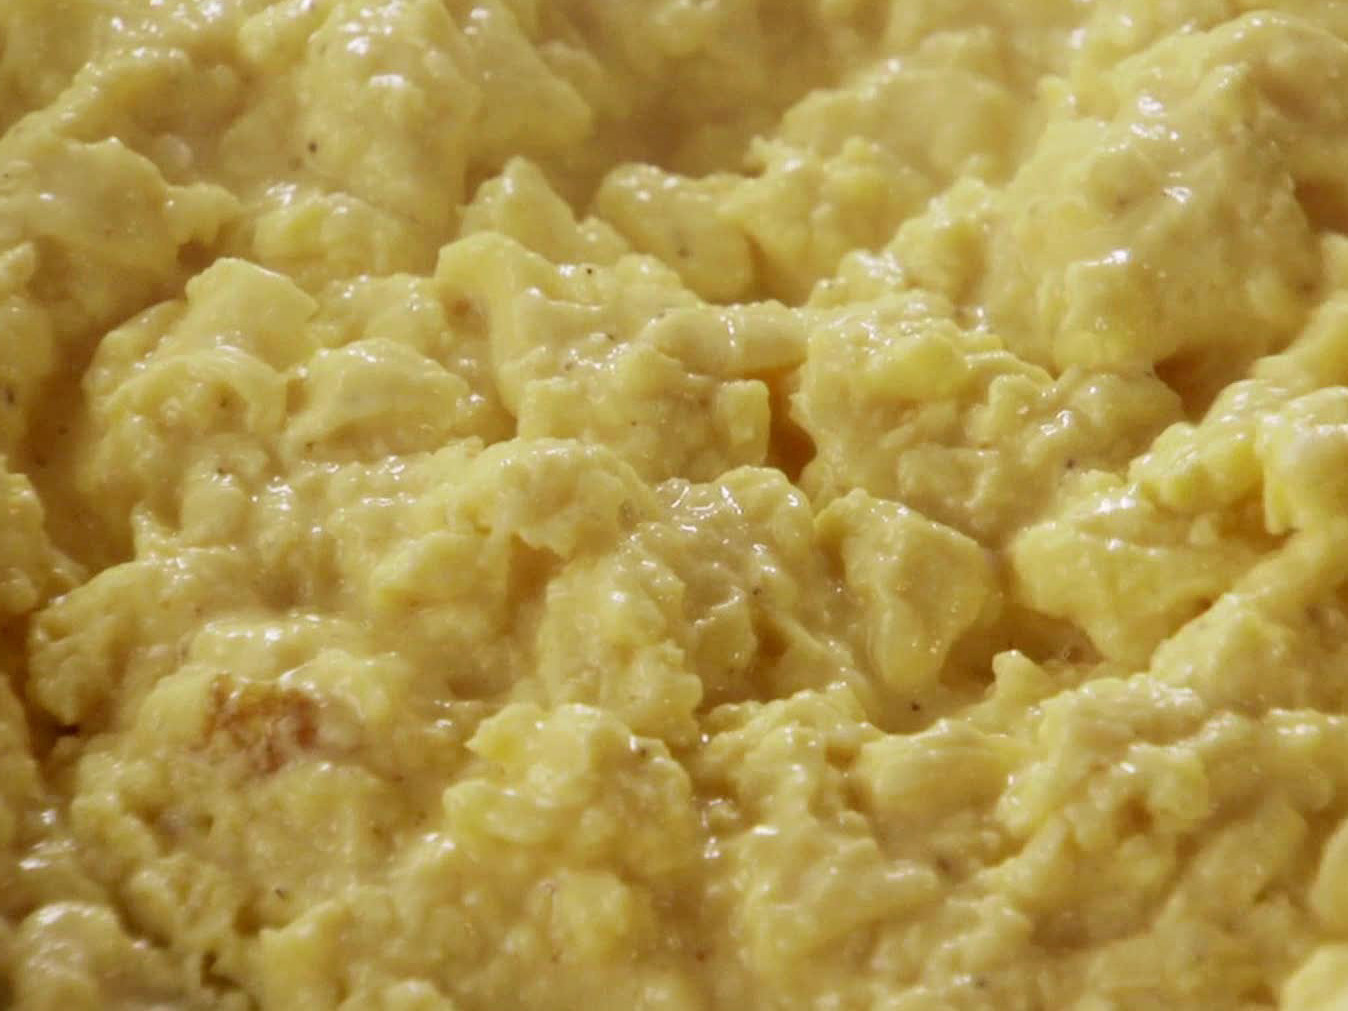 https://www.foodnetwork.com/content/dam/images/food/fullset/2013/8/7/0/WU0509H_spicy-scrambled-eggs-recipe_s4x3.jpg